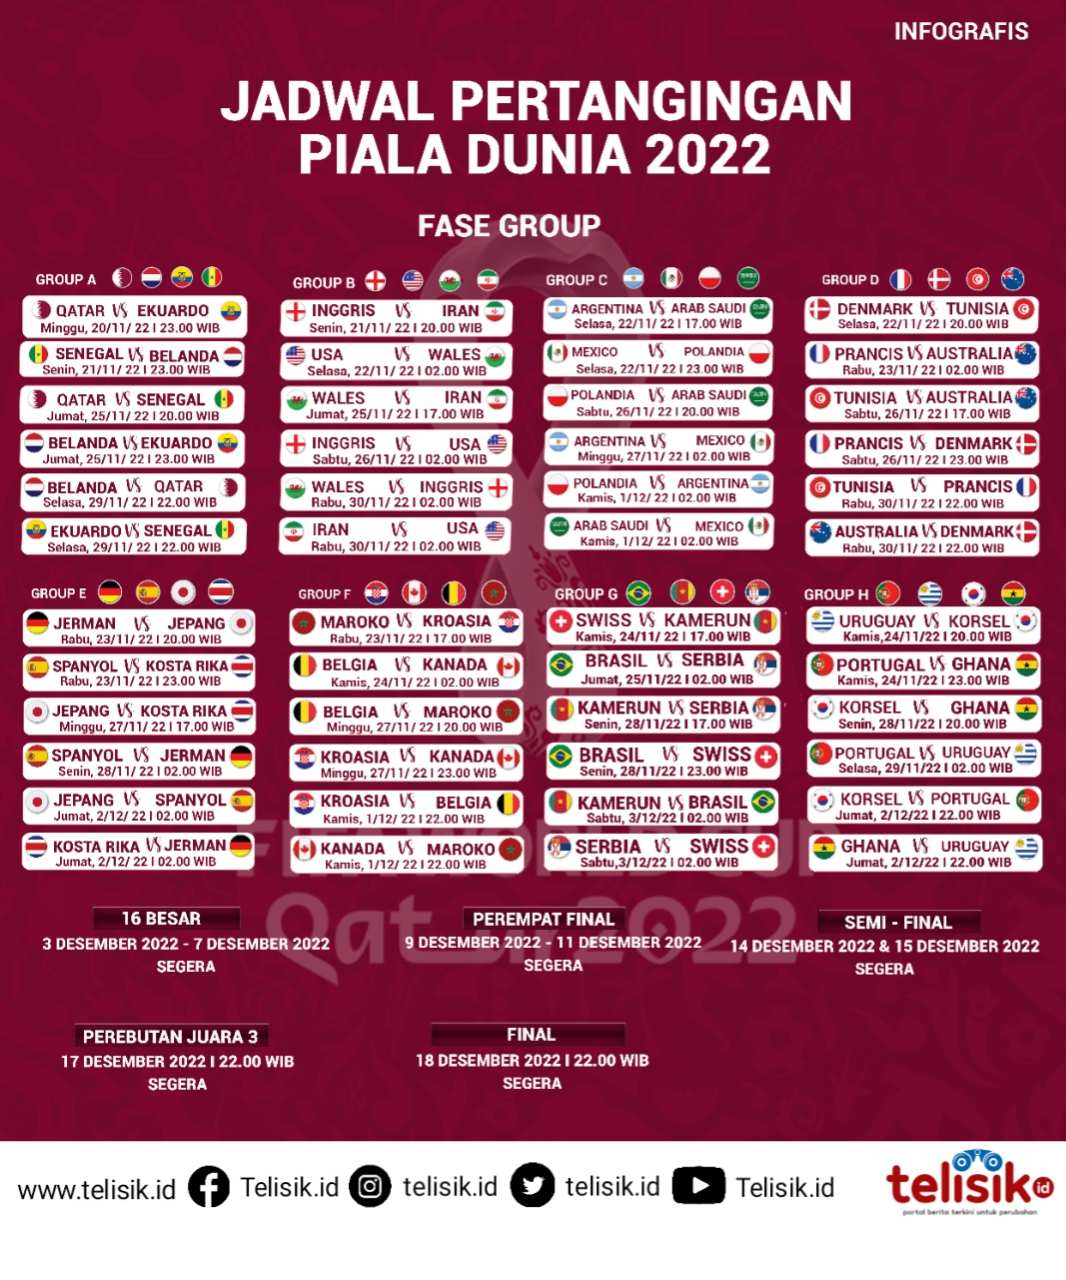 Infografis: Jadwal Pertandingan Piala Dunia Qatar 2022